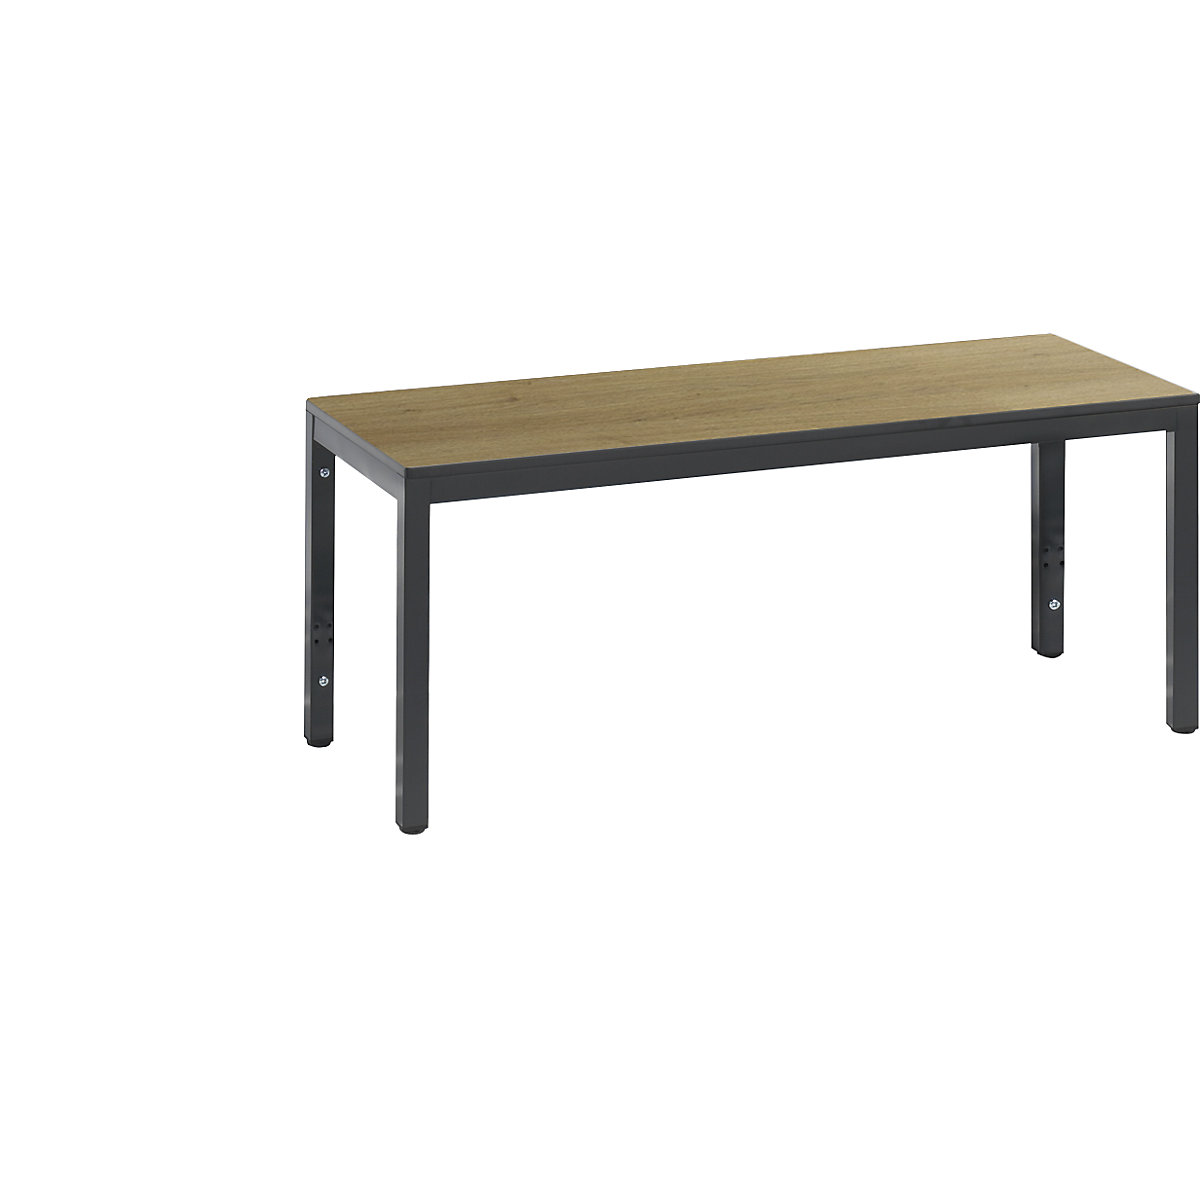 BASIC PLUS cloakroom bench – C+P, HPL seat surface, length 1000 mm, oak finish-10